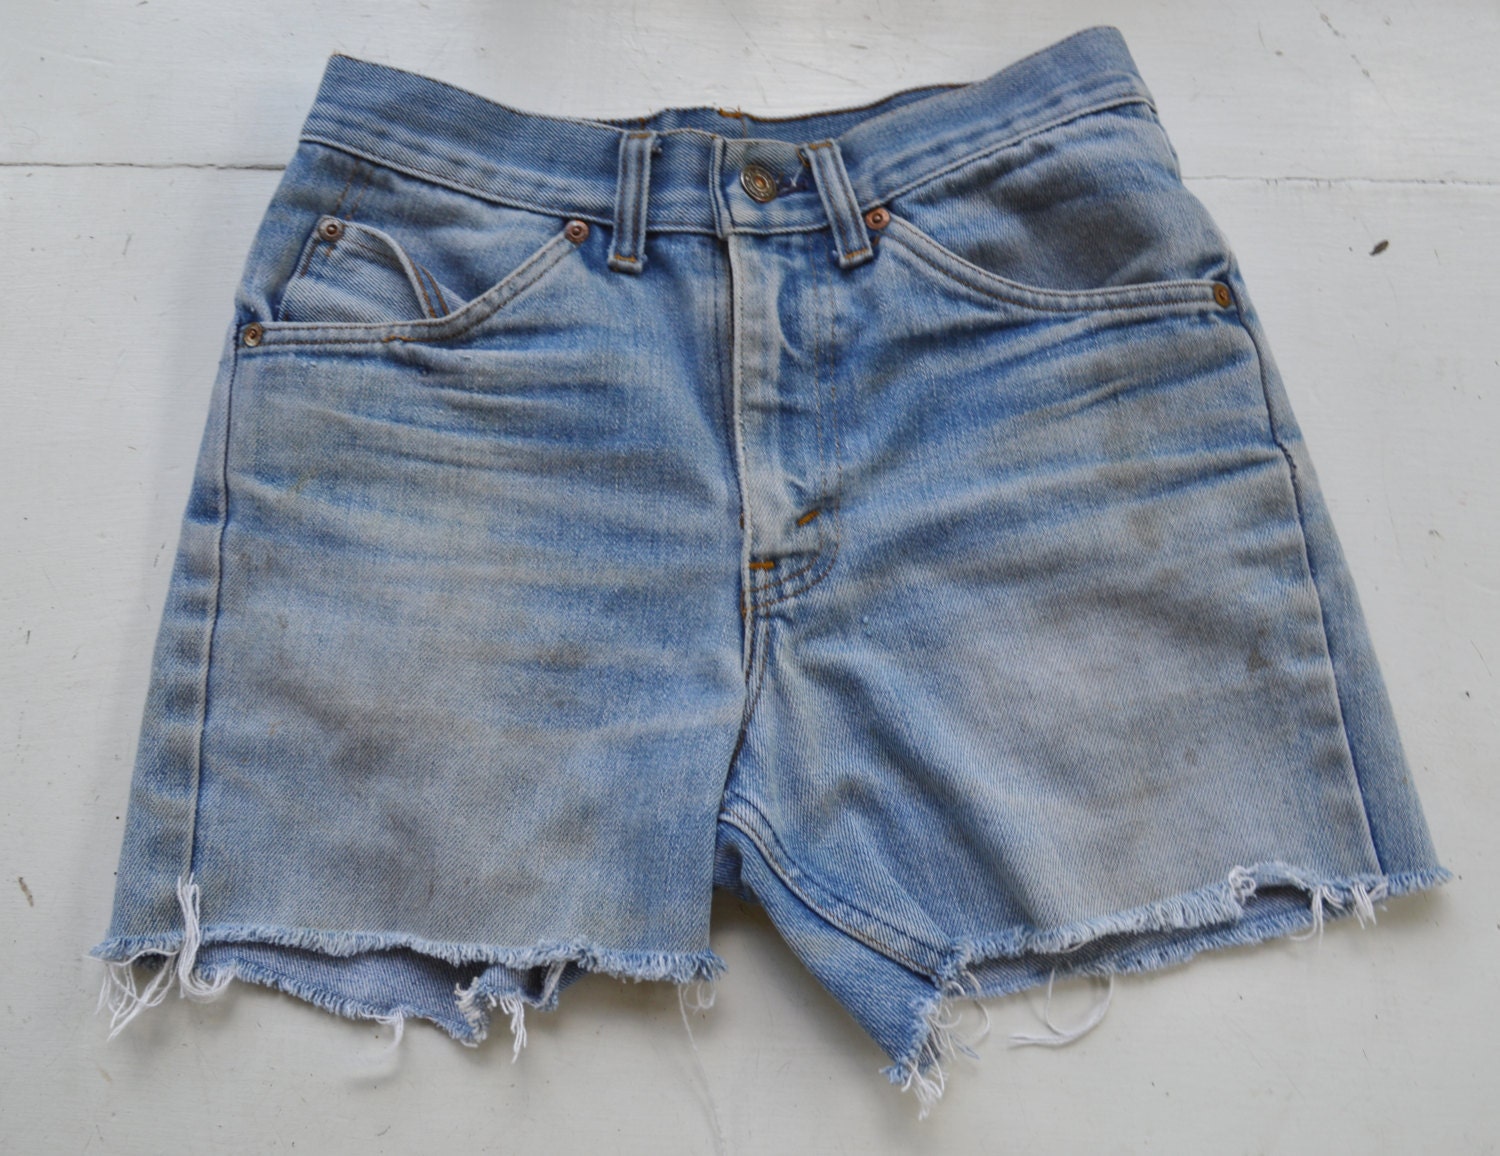 Cut Off Jeans 1960s Mens Denim Shorts Plain Pocket by EaDoVintage